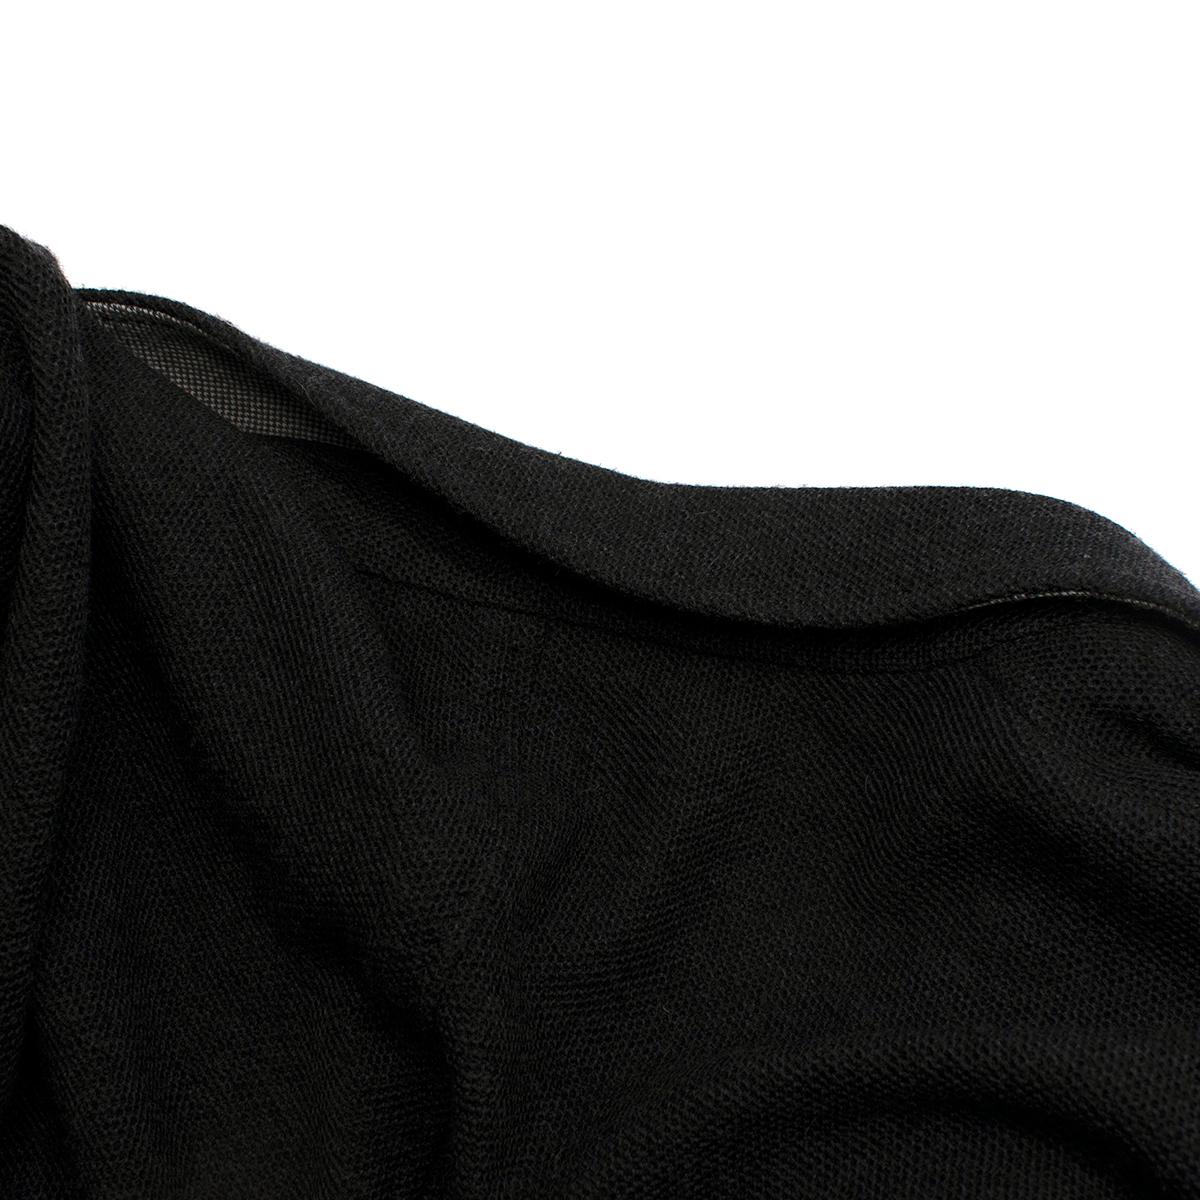 Ermenegildo Zegna Dark Grey Wool Single Breasted Jacket - Us size  For Sale 3